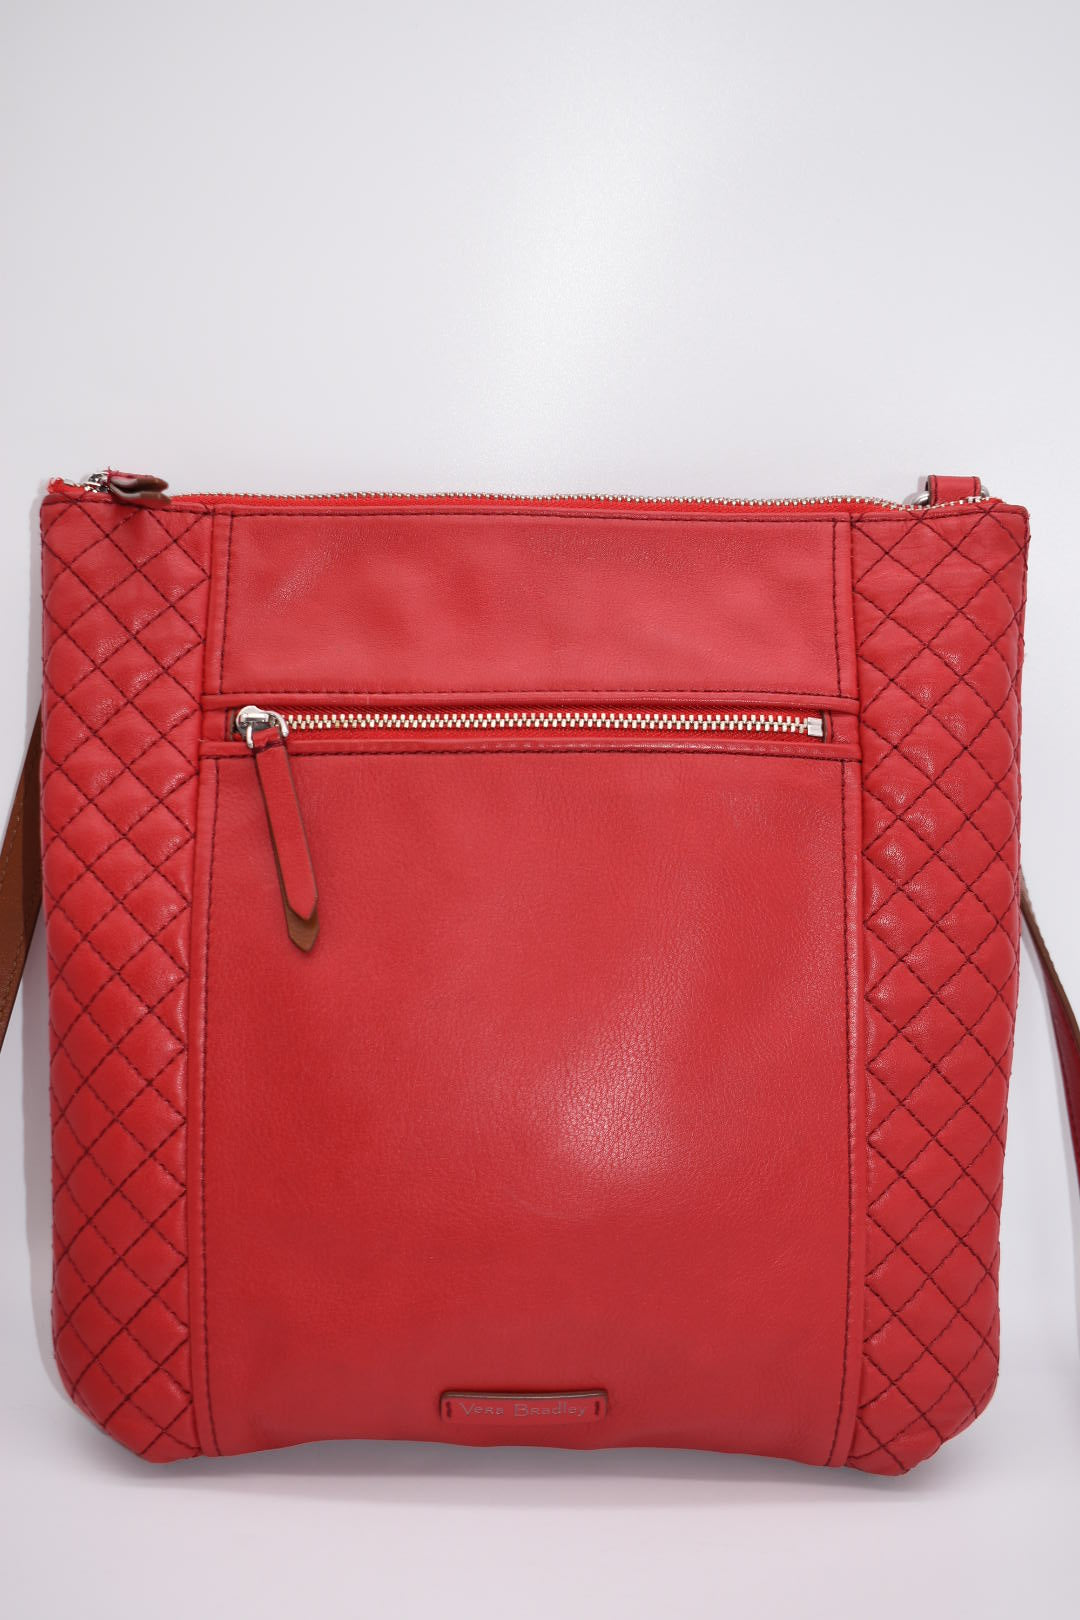 Vera Bradley Carryall Hipster Crossbody Bag in "Cardinal Red" Pattern